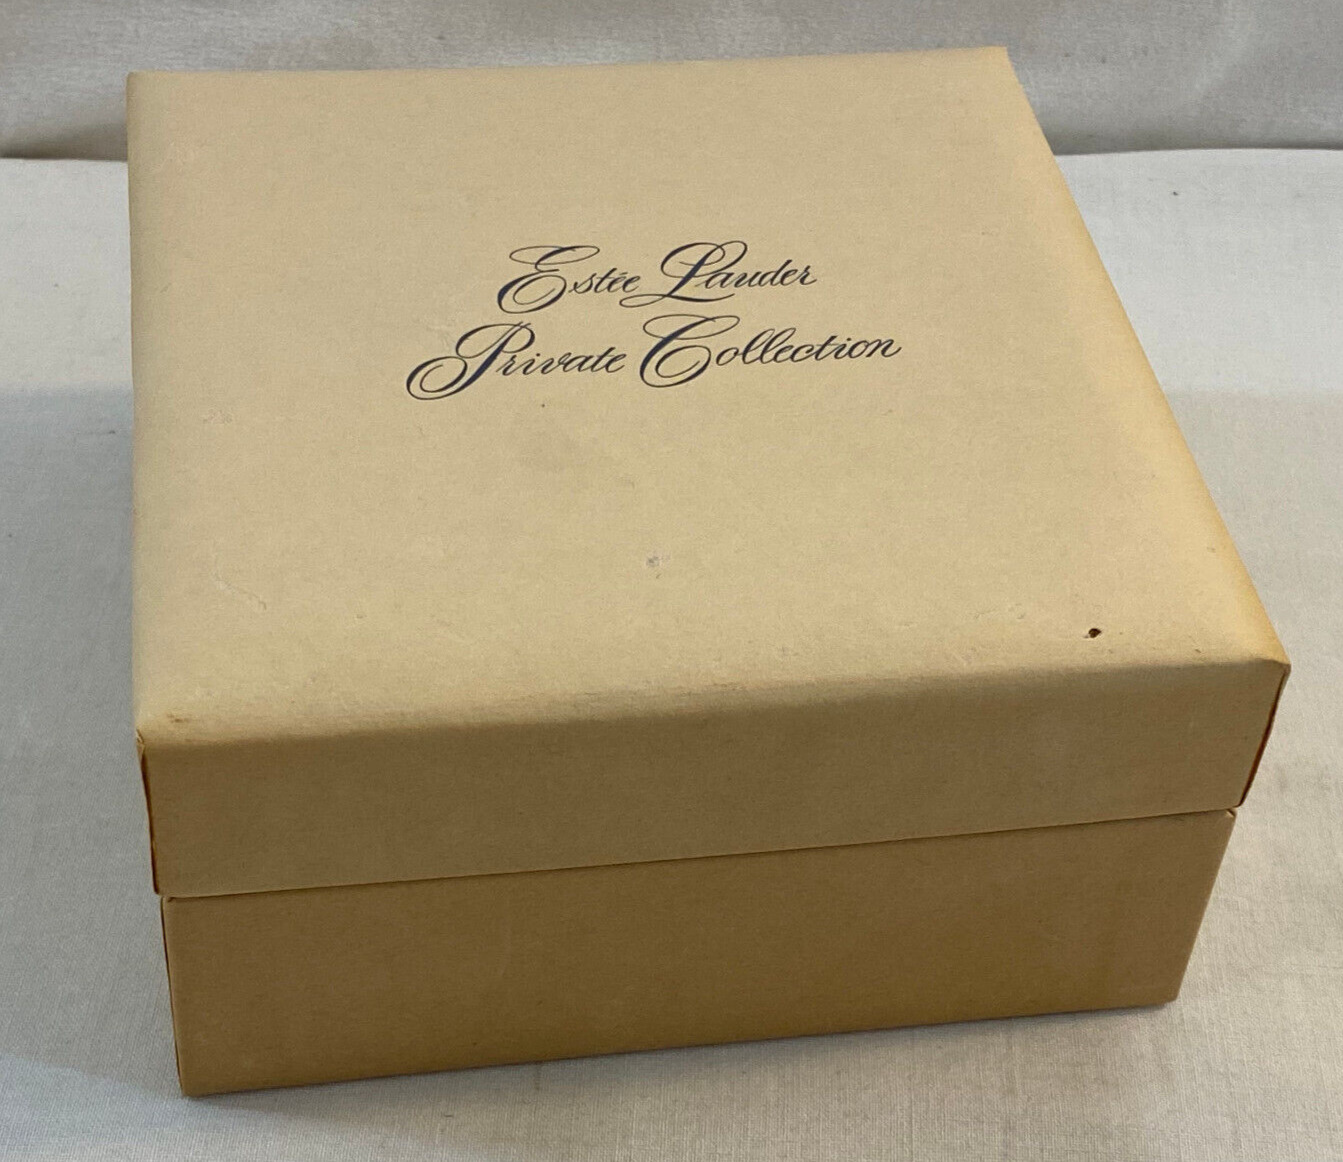 Vintage Estee Lauder Private Collection Dusting Powder Square Box 4.5 oz.